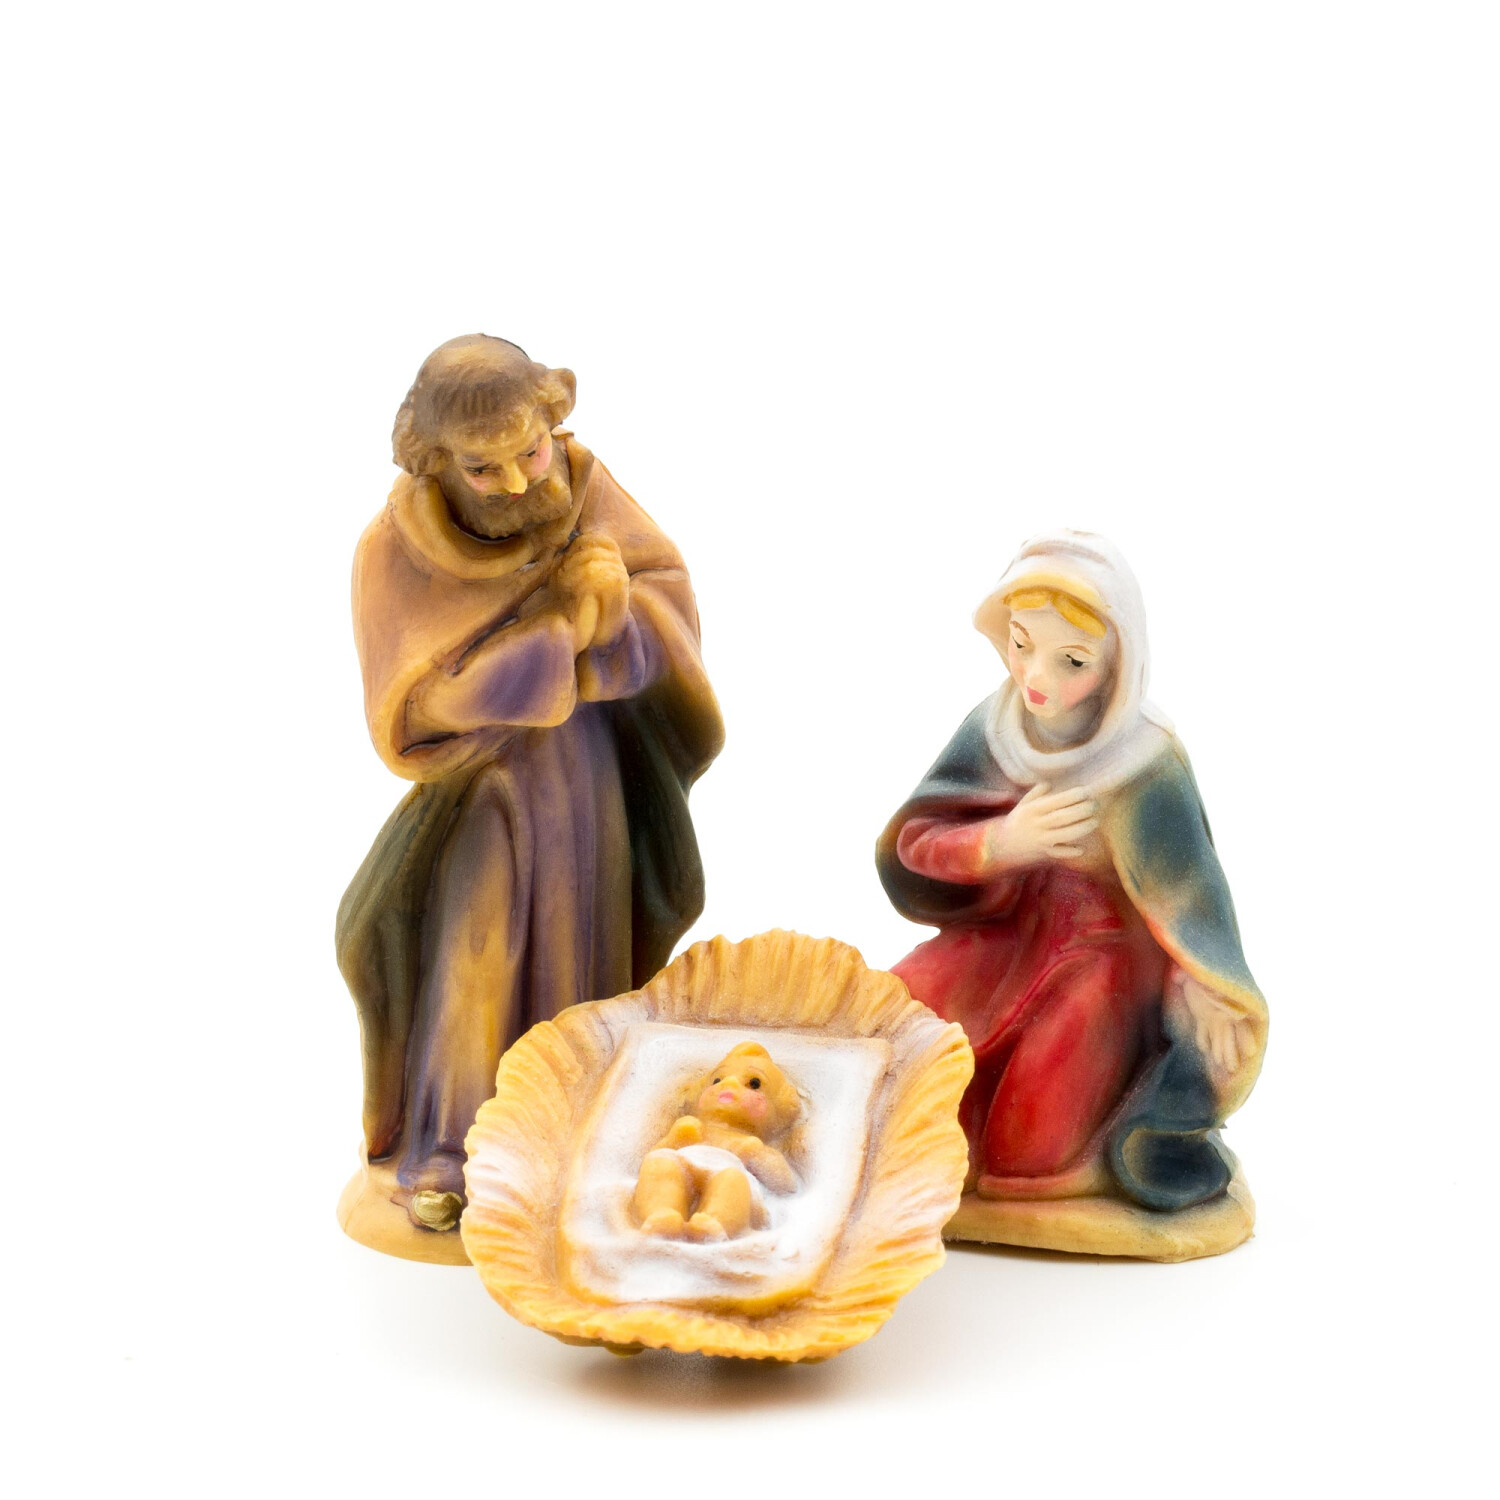 Nativity set - Marolin Plastik - Resin Nativity figure - made in Germany